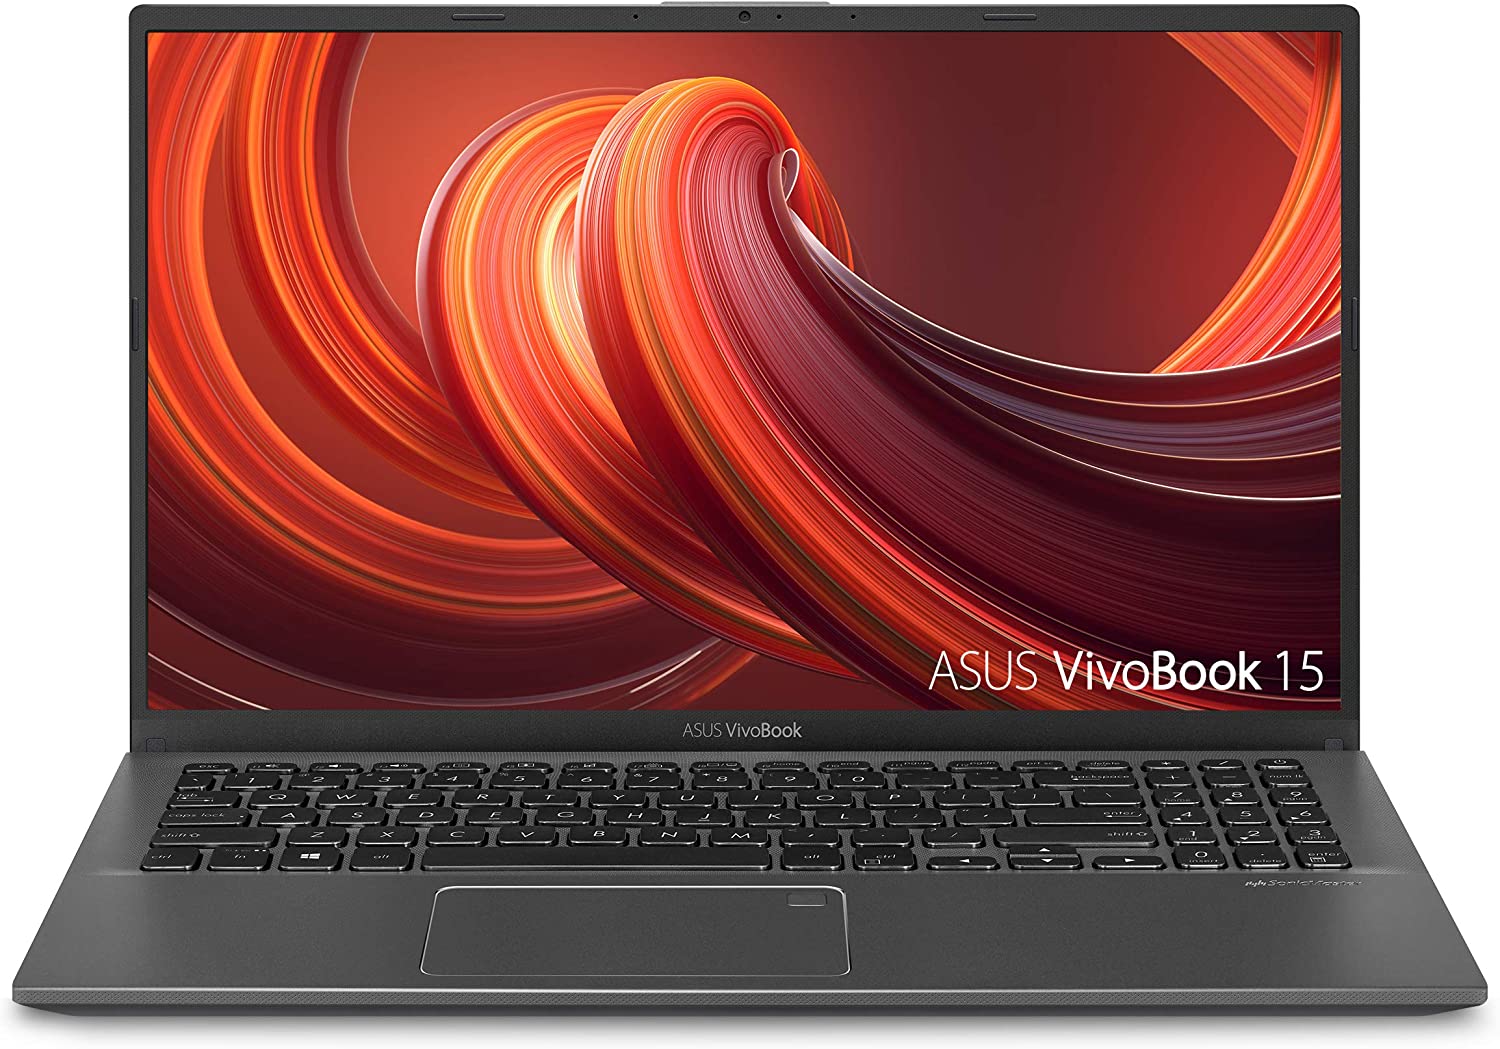 ASUS VivoBook F512 Thin and Lightweight Laptop, 15.6” FHD WideView NanoEdge , AMD R5-3500U CPU, 8GB RAM, 256GB SSD, Backlit KB, Fingerprint Reader